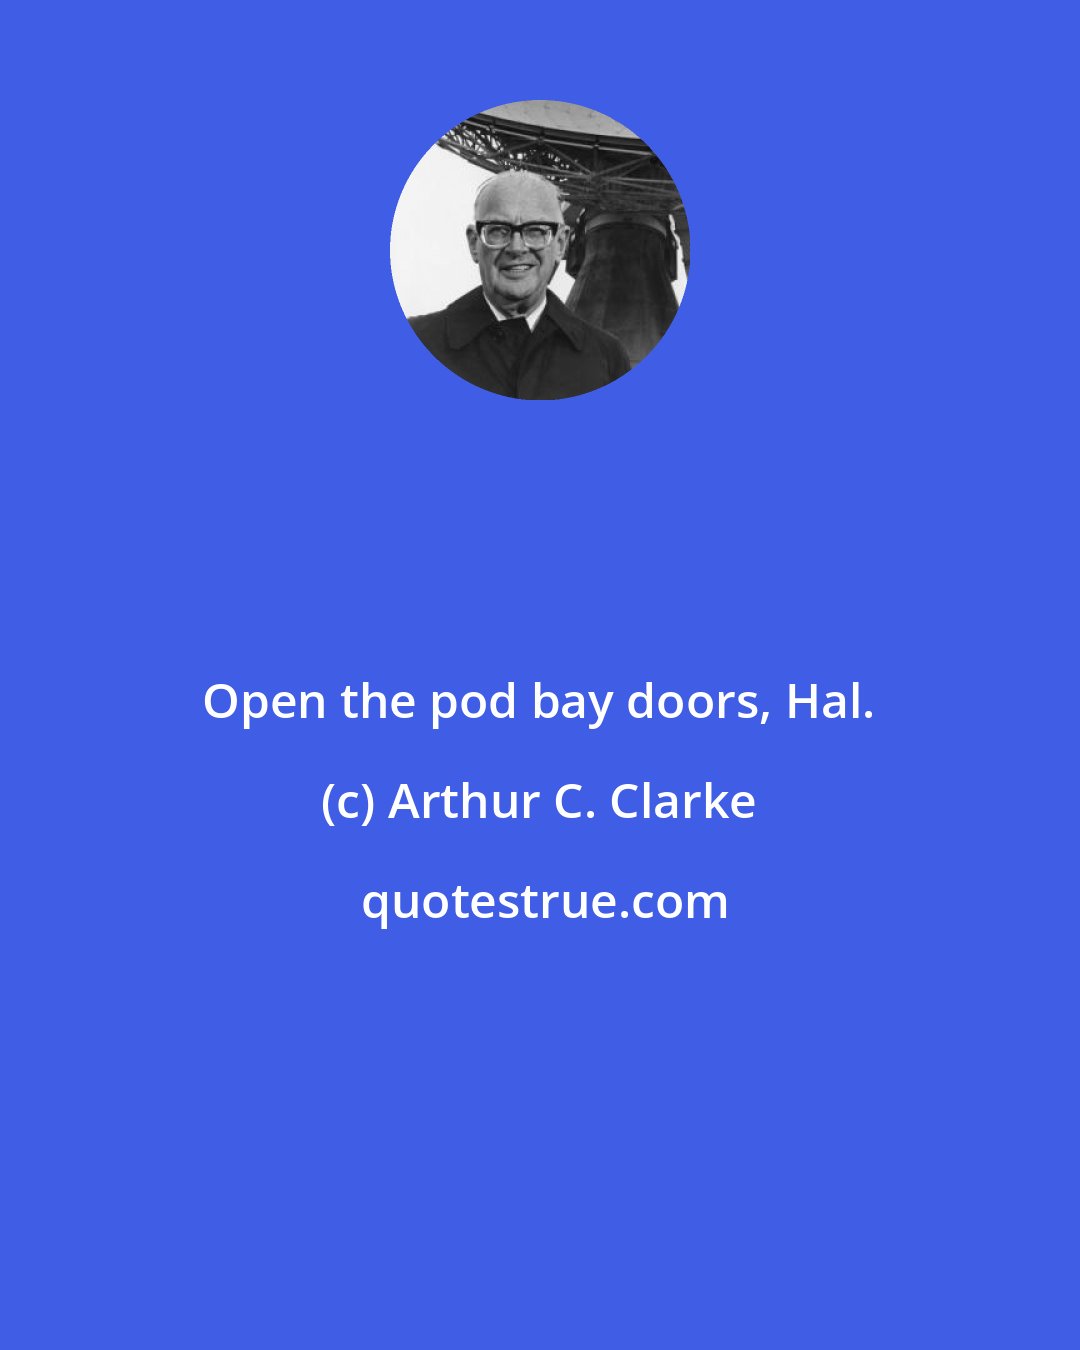 Arthur C. Clarke: Open the pod bay doors, Hal.